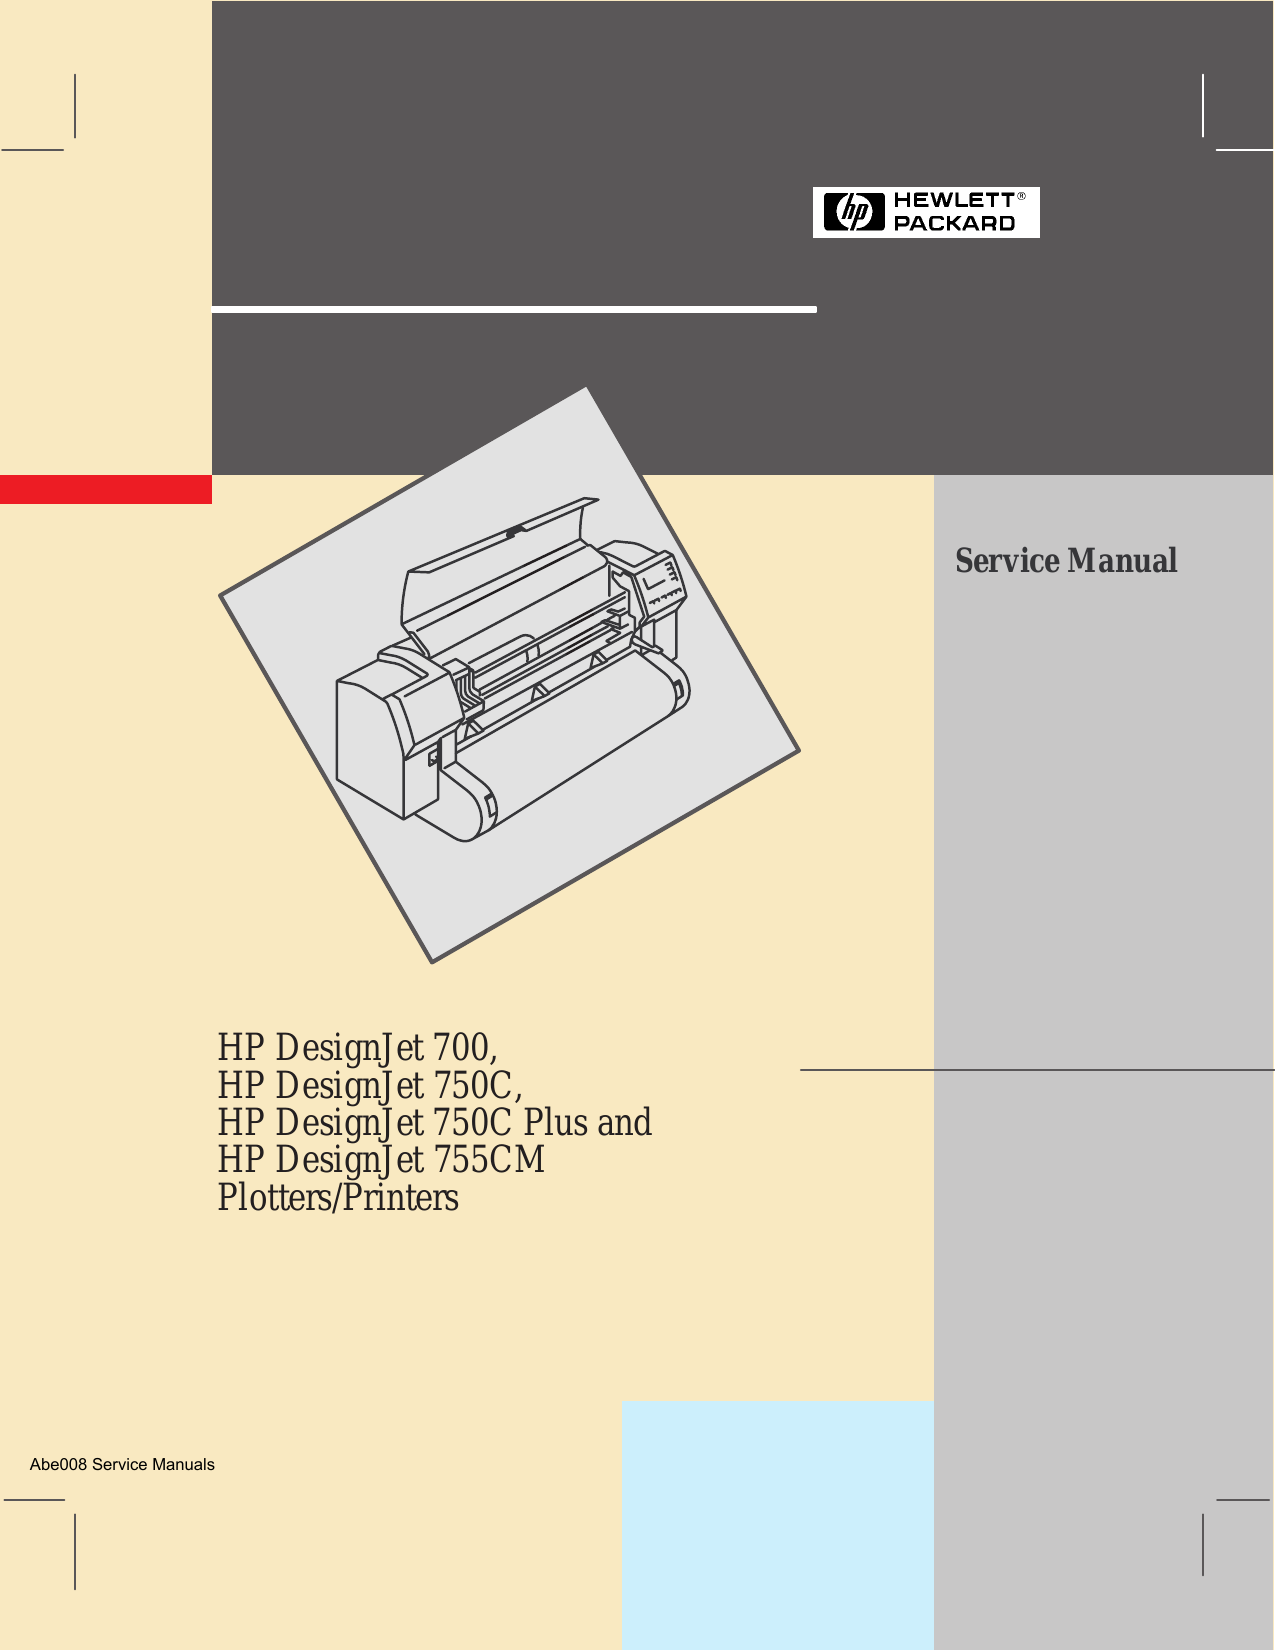 HP Designjet 700, 755, 755CM, 750C, 750C Plus large-format printer service guide Preview image 1